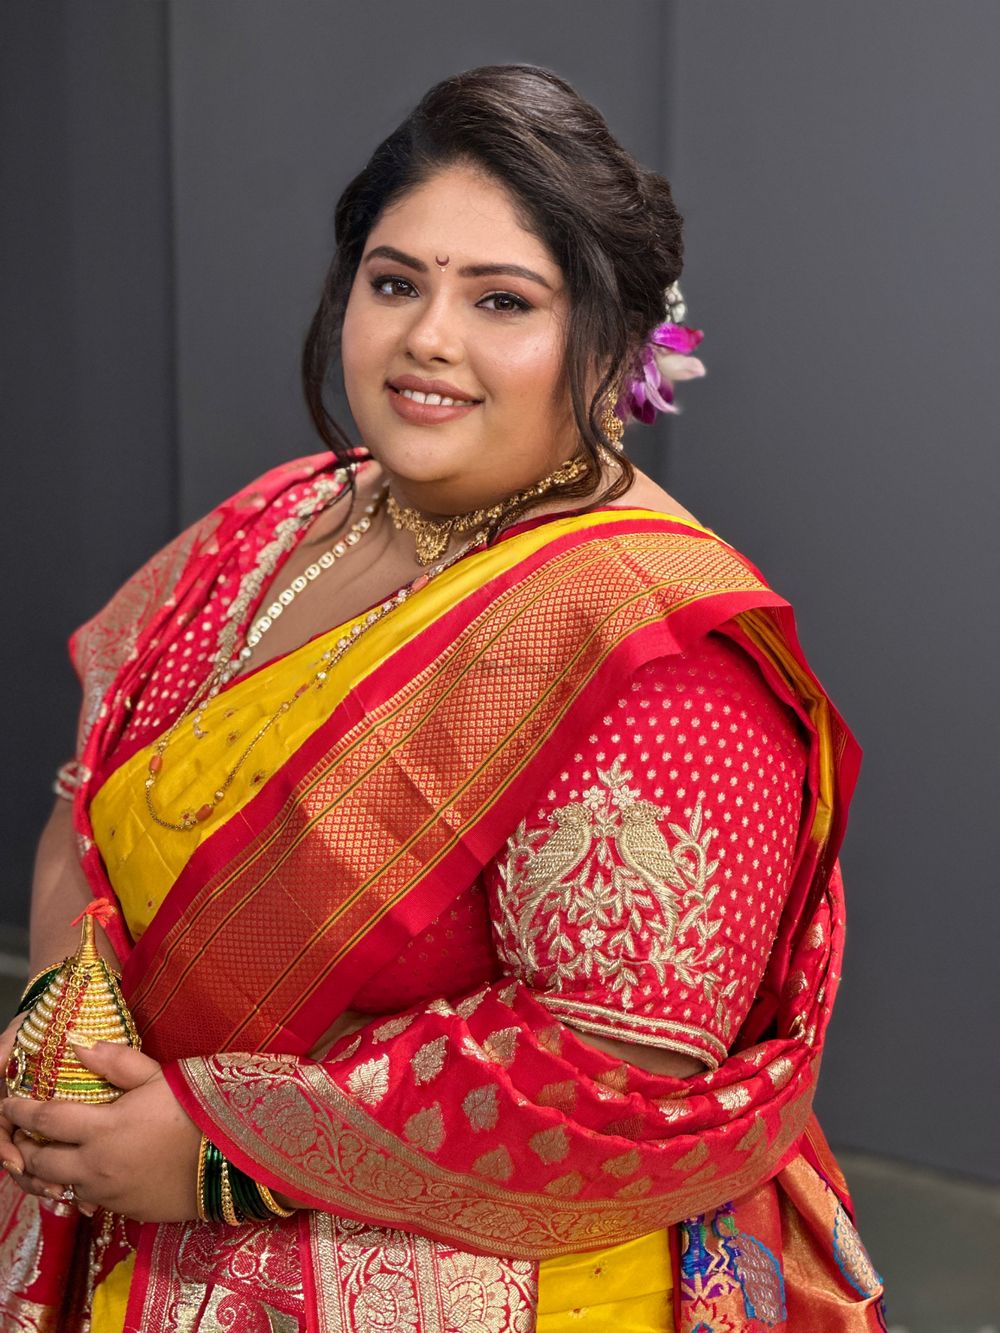 Photo From Maharashtrian Brides - By Gincy Thomas Makeup & Hair Design